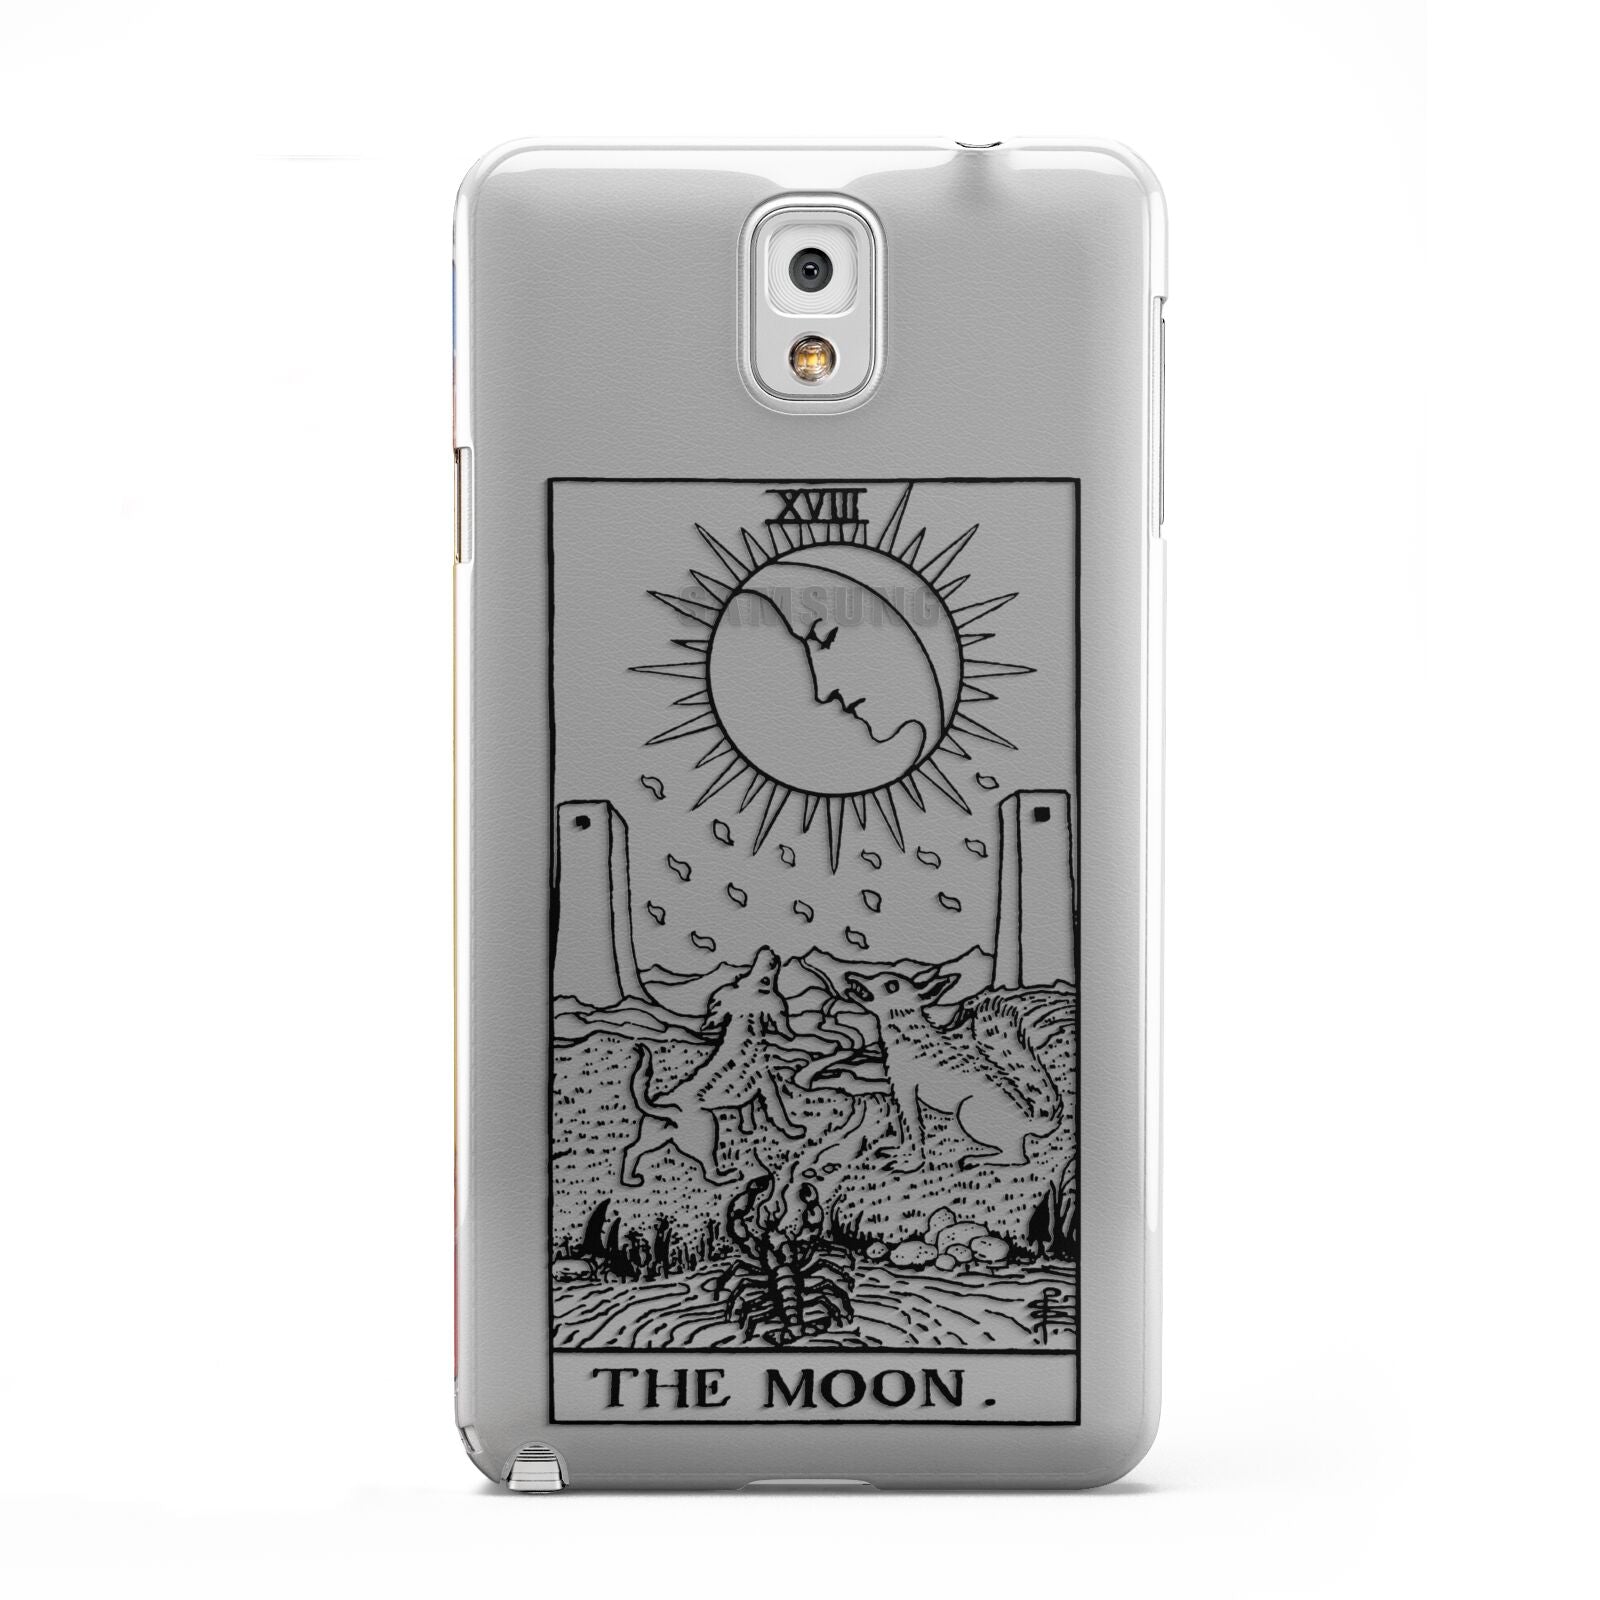 The Moon Monochrome Samsung Galaxy Note 3 Case